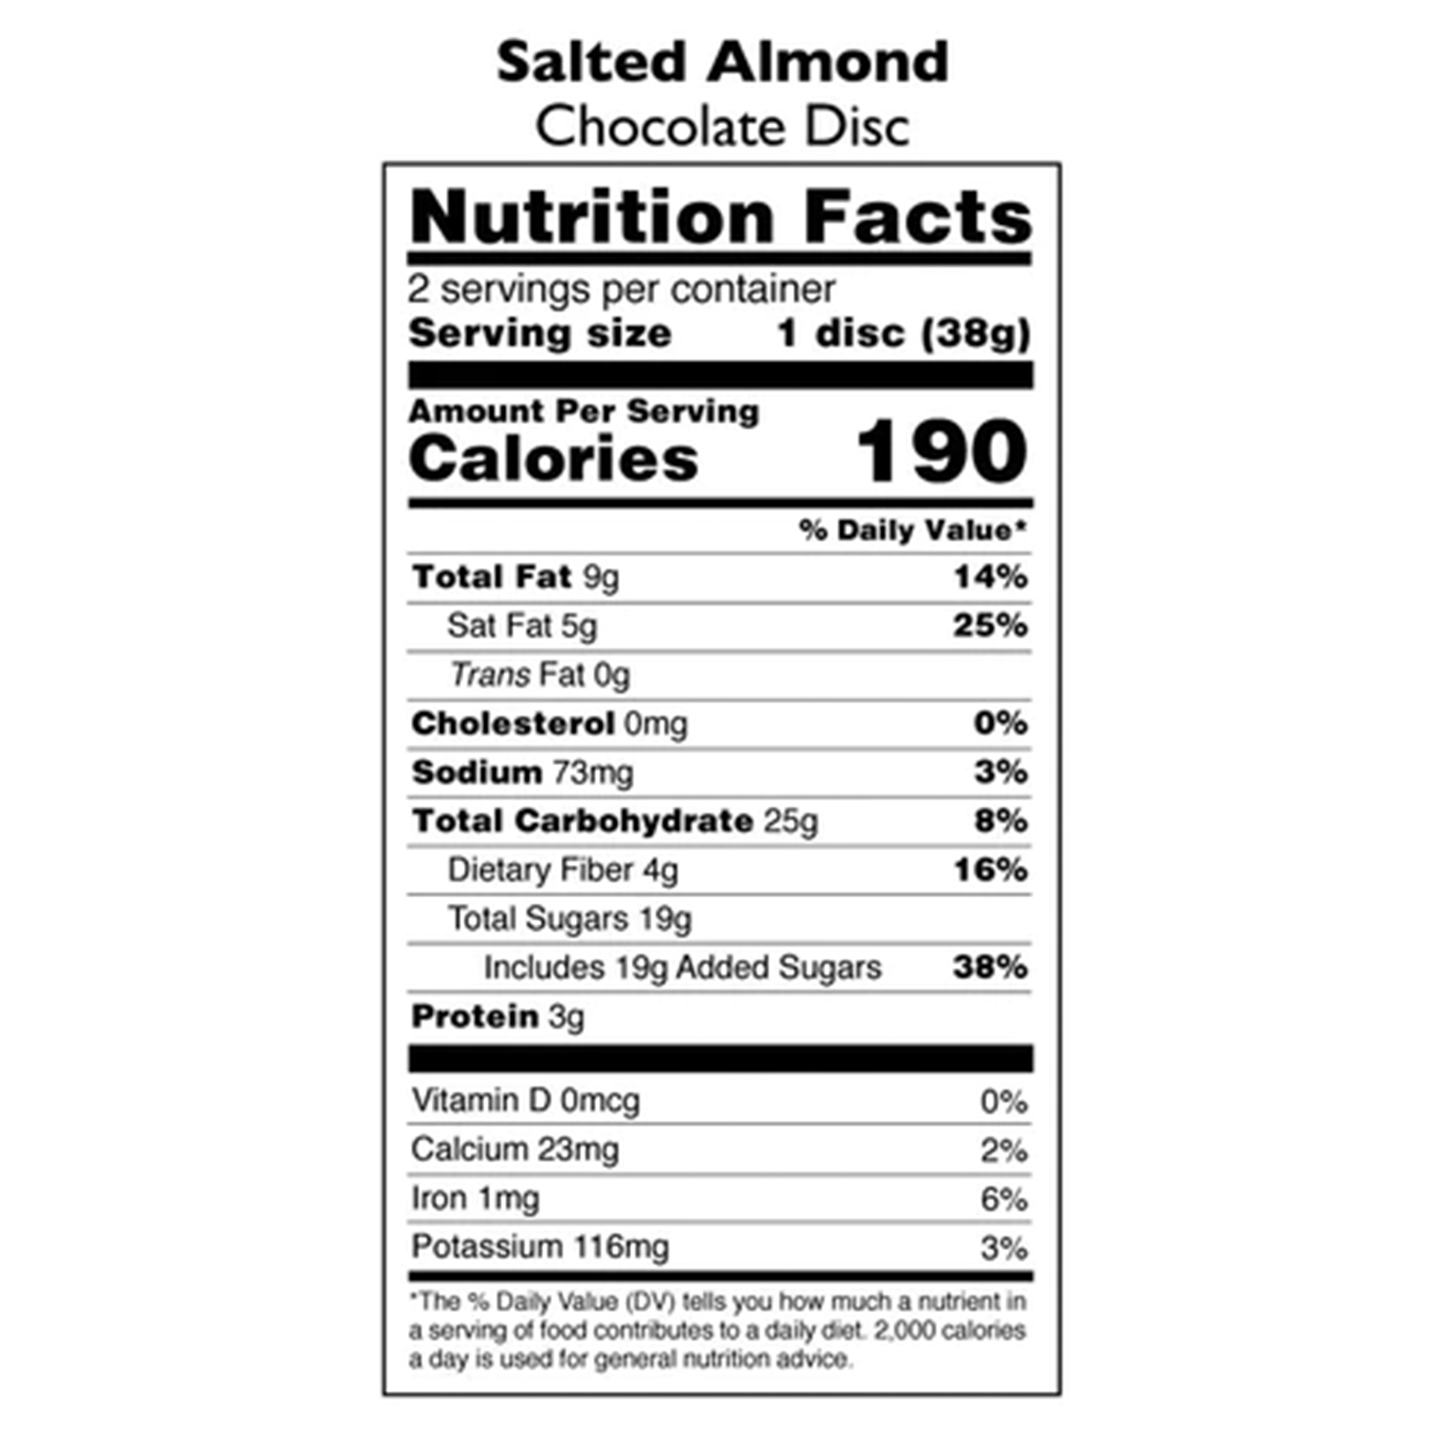 Taza® Salted Almond 40% Dark Chocolate (2 discs) 77g